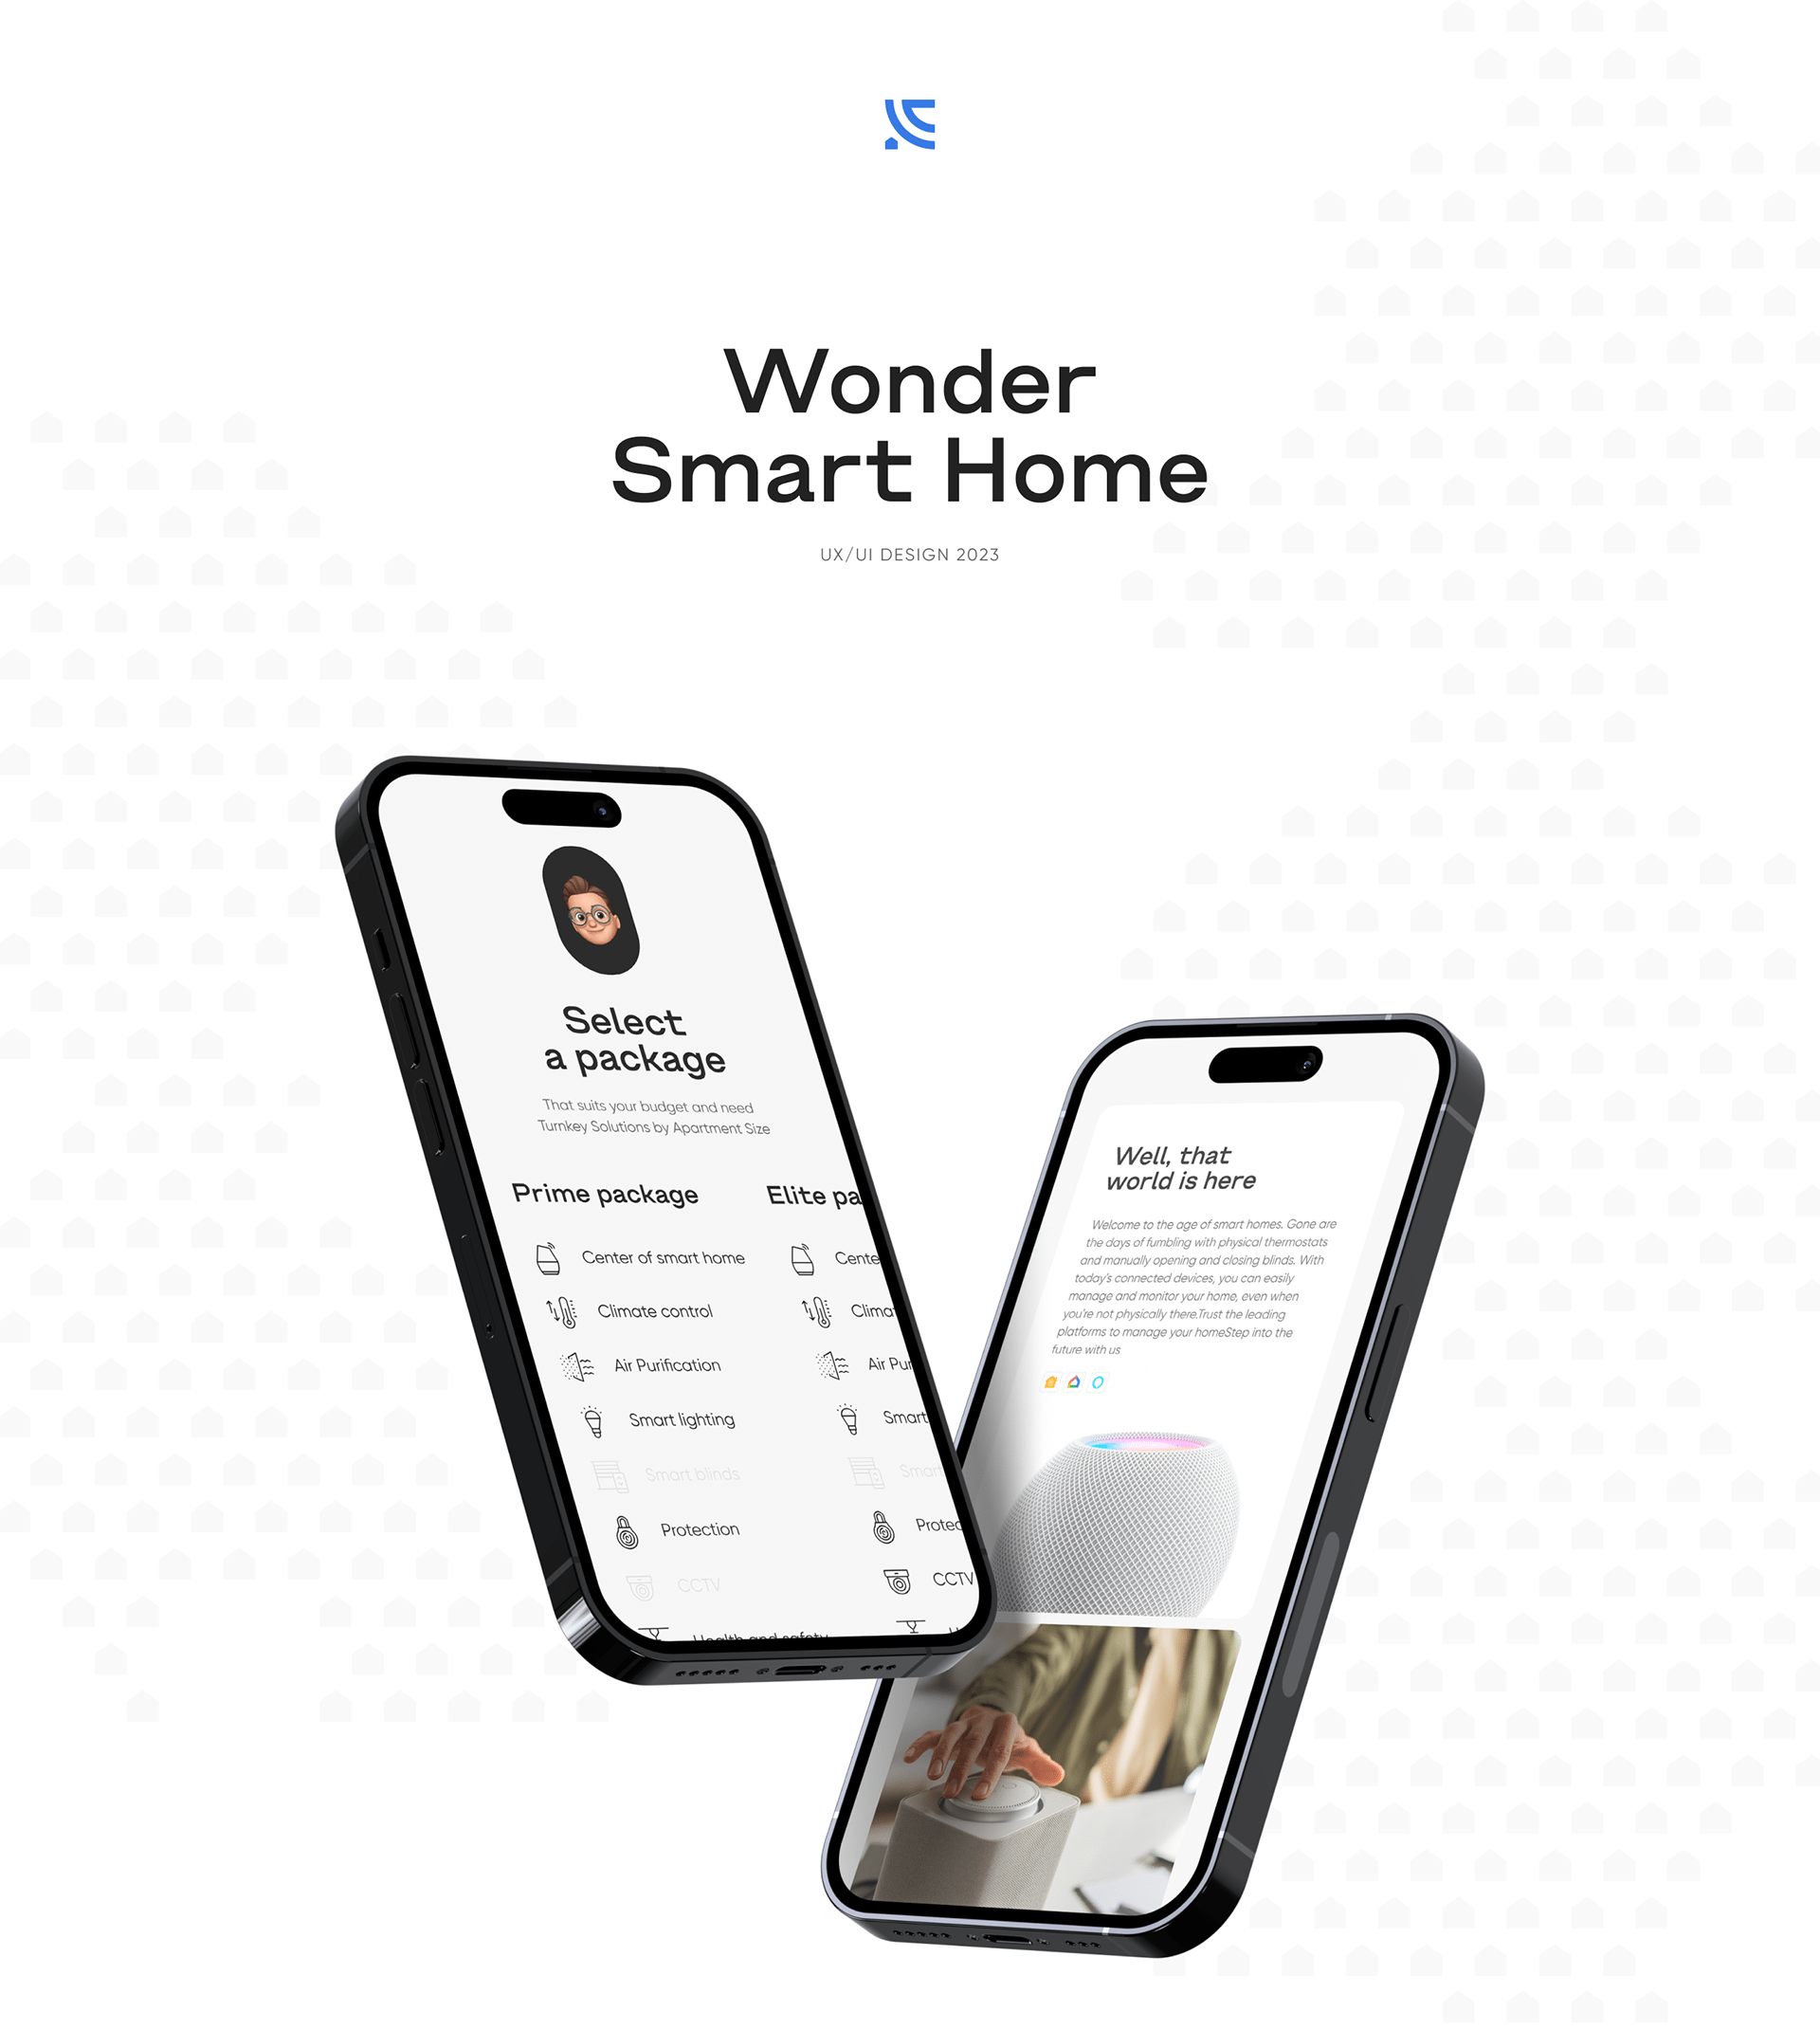 Wonder smart home | web. — Изображение №1 — Интерфейсы на Dprofile